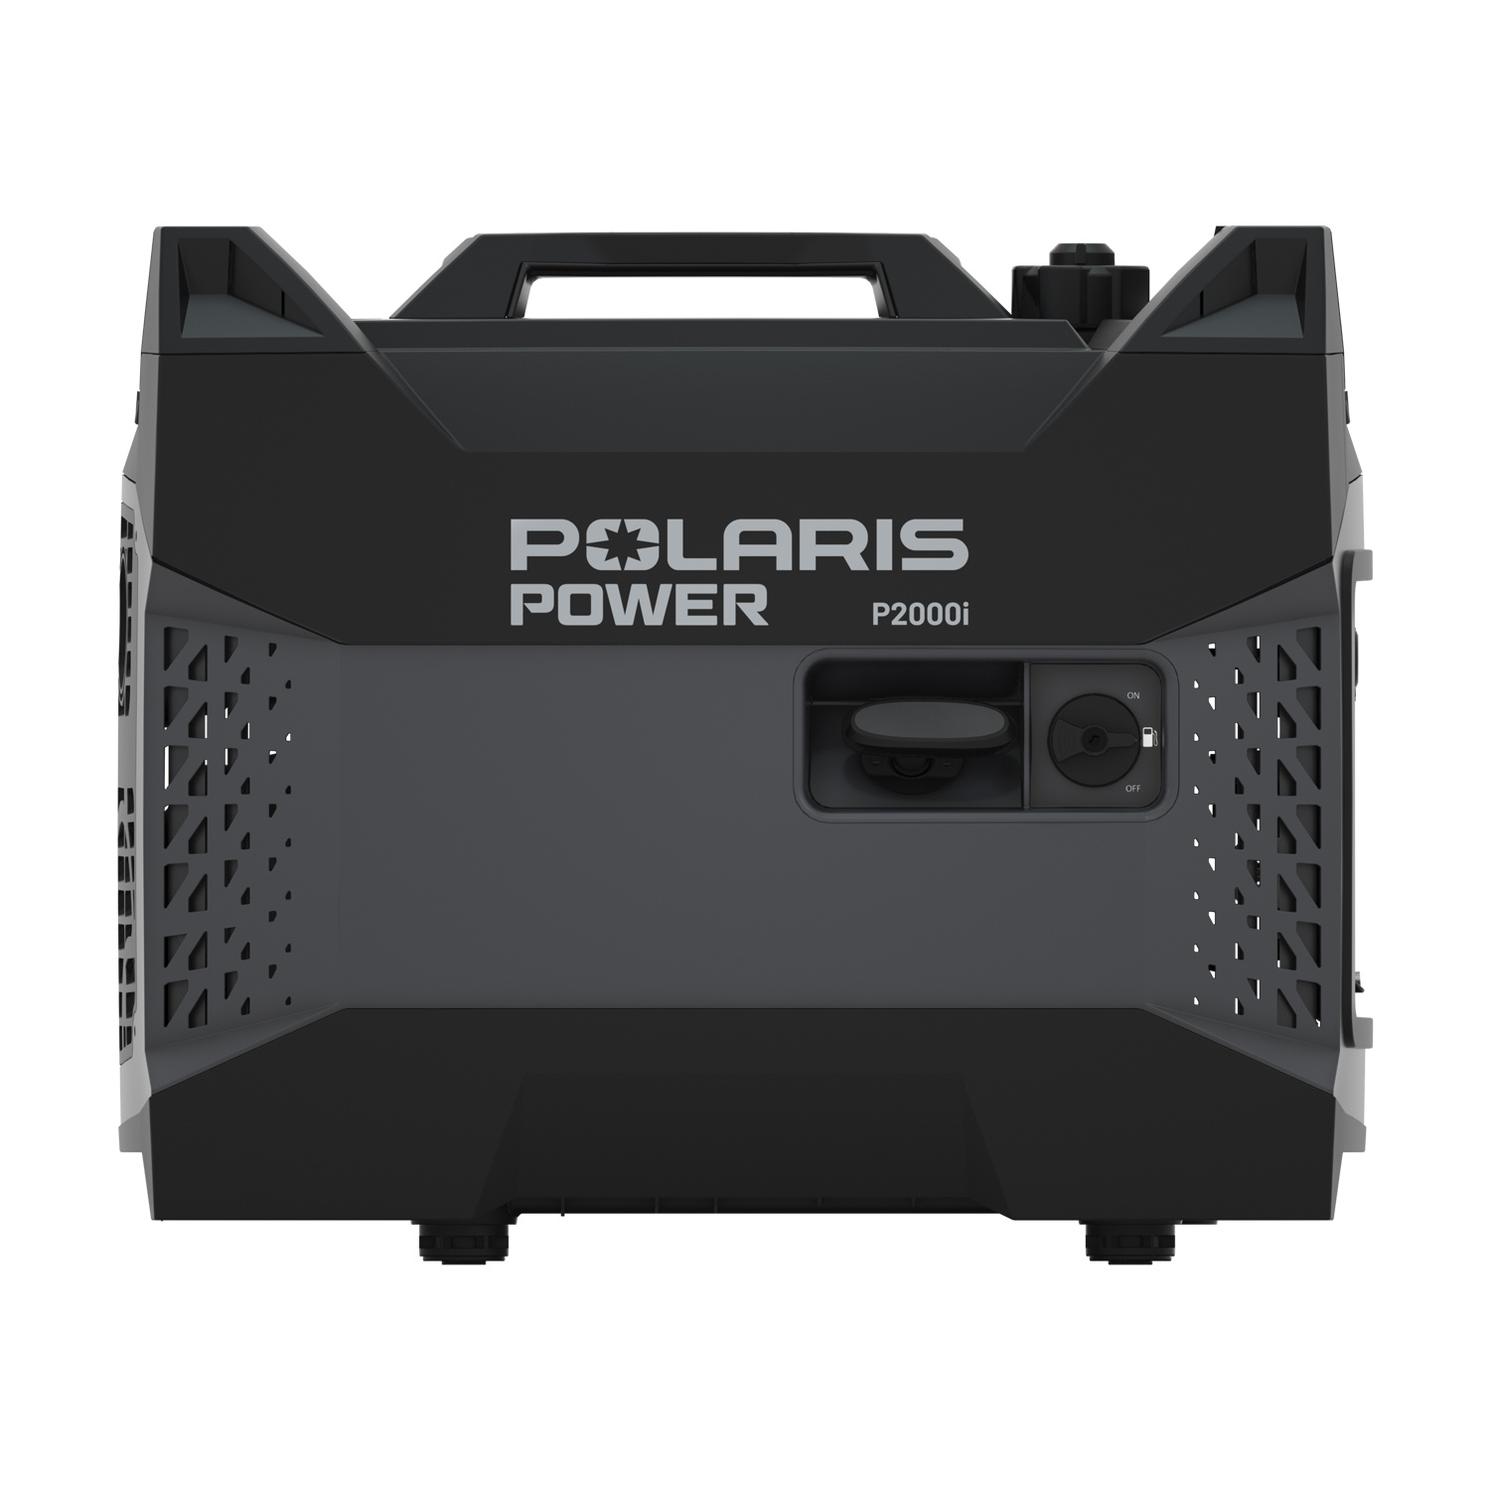 Polaris P2000i Power Portable Inverter Generator 2022